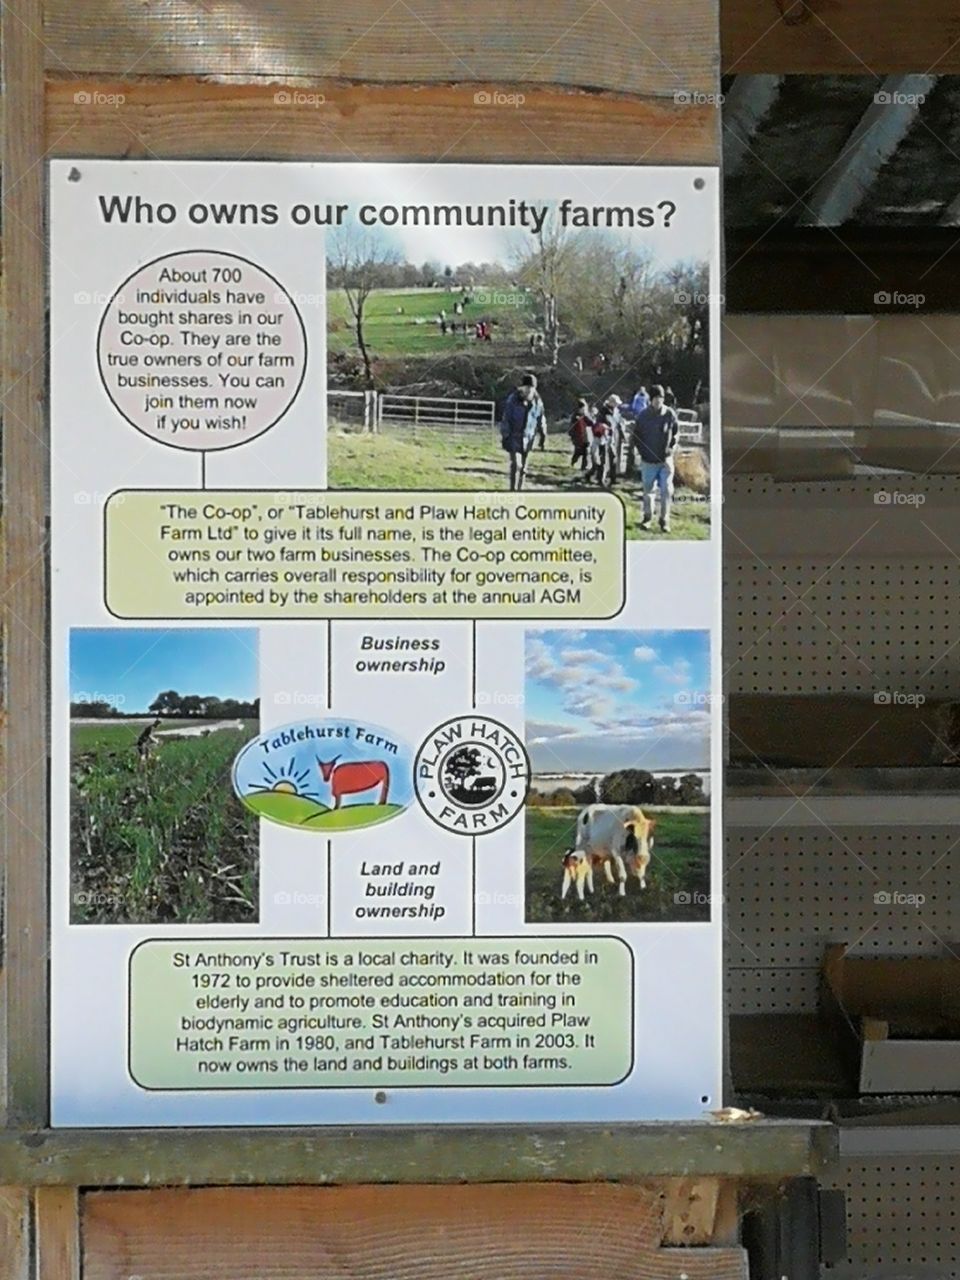 Tablehurst Farm - Community farm